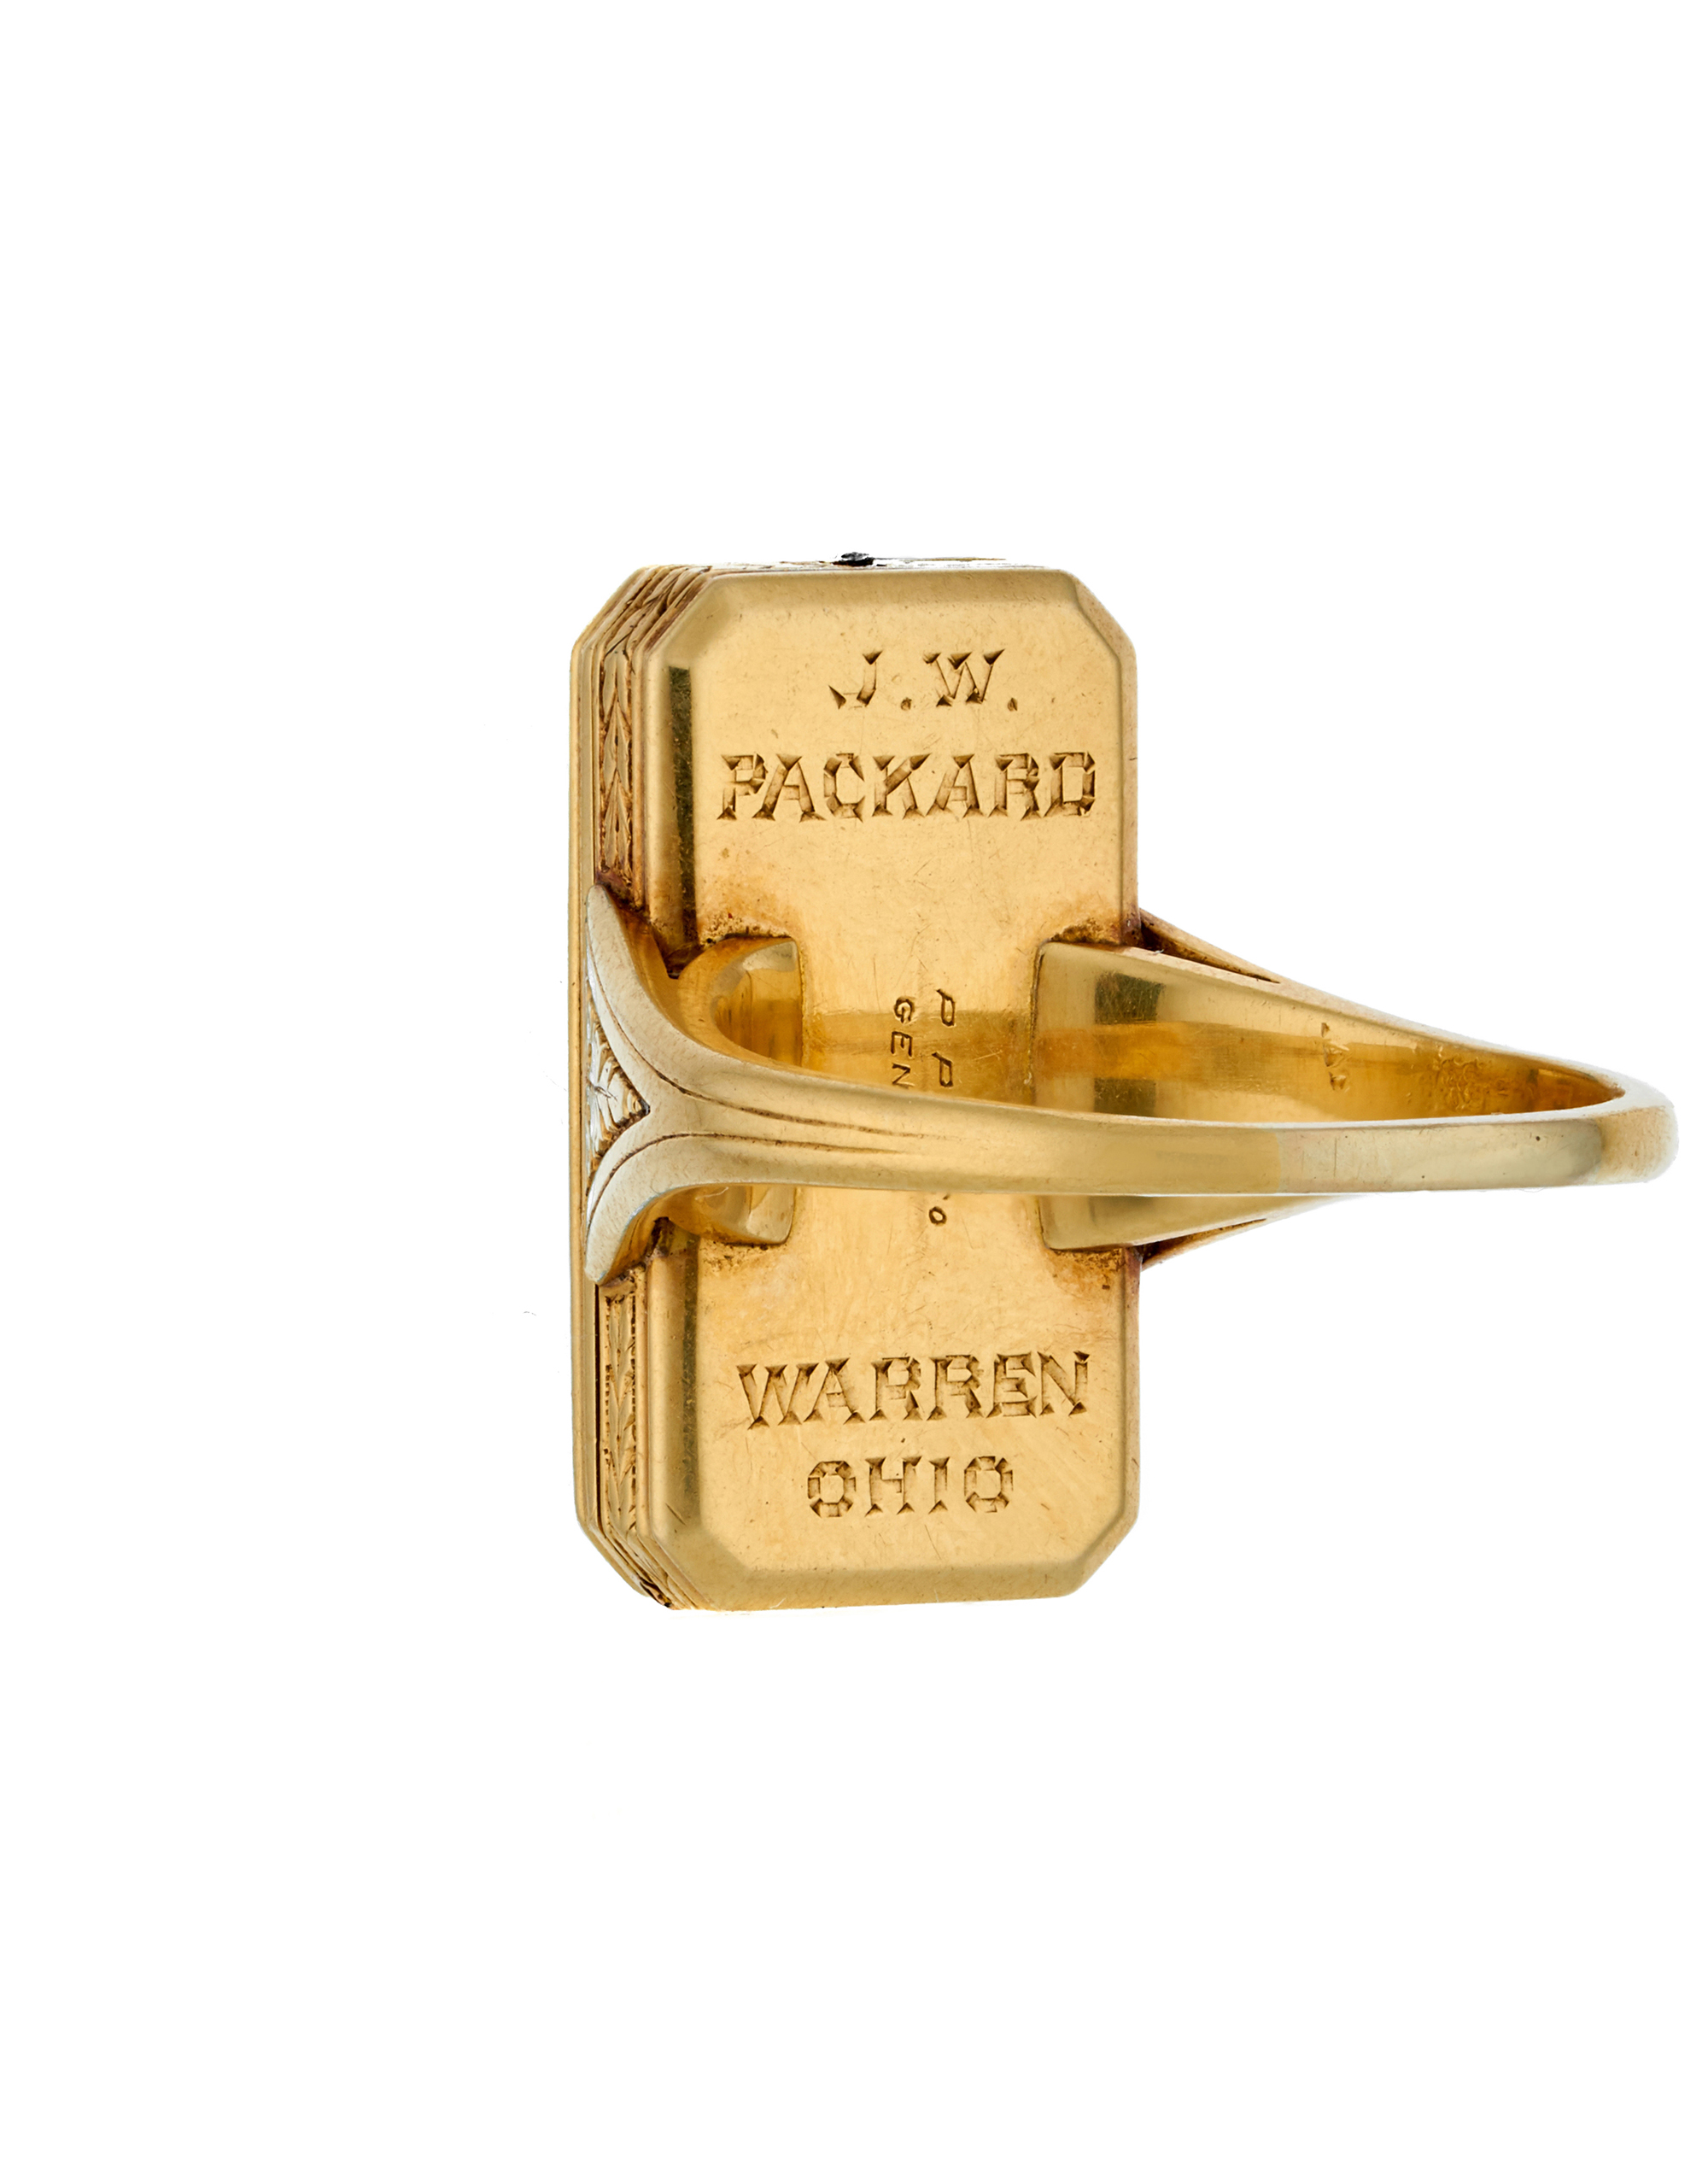 James Ward Packard Patek Philippe Ring Watch